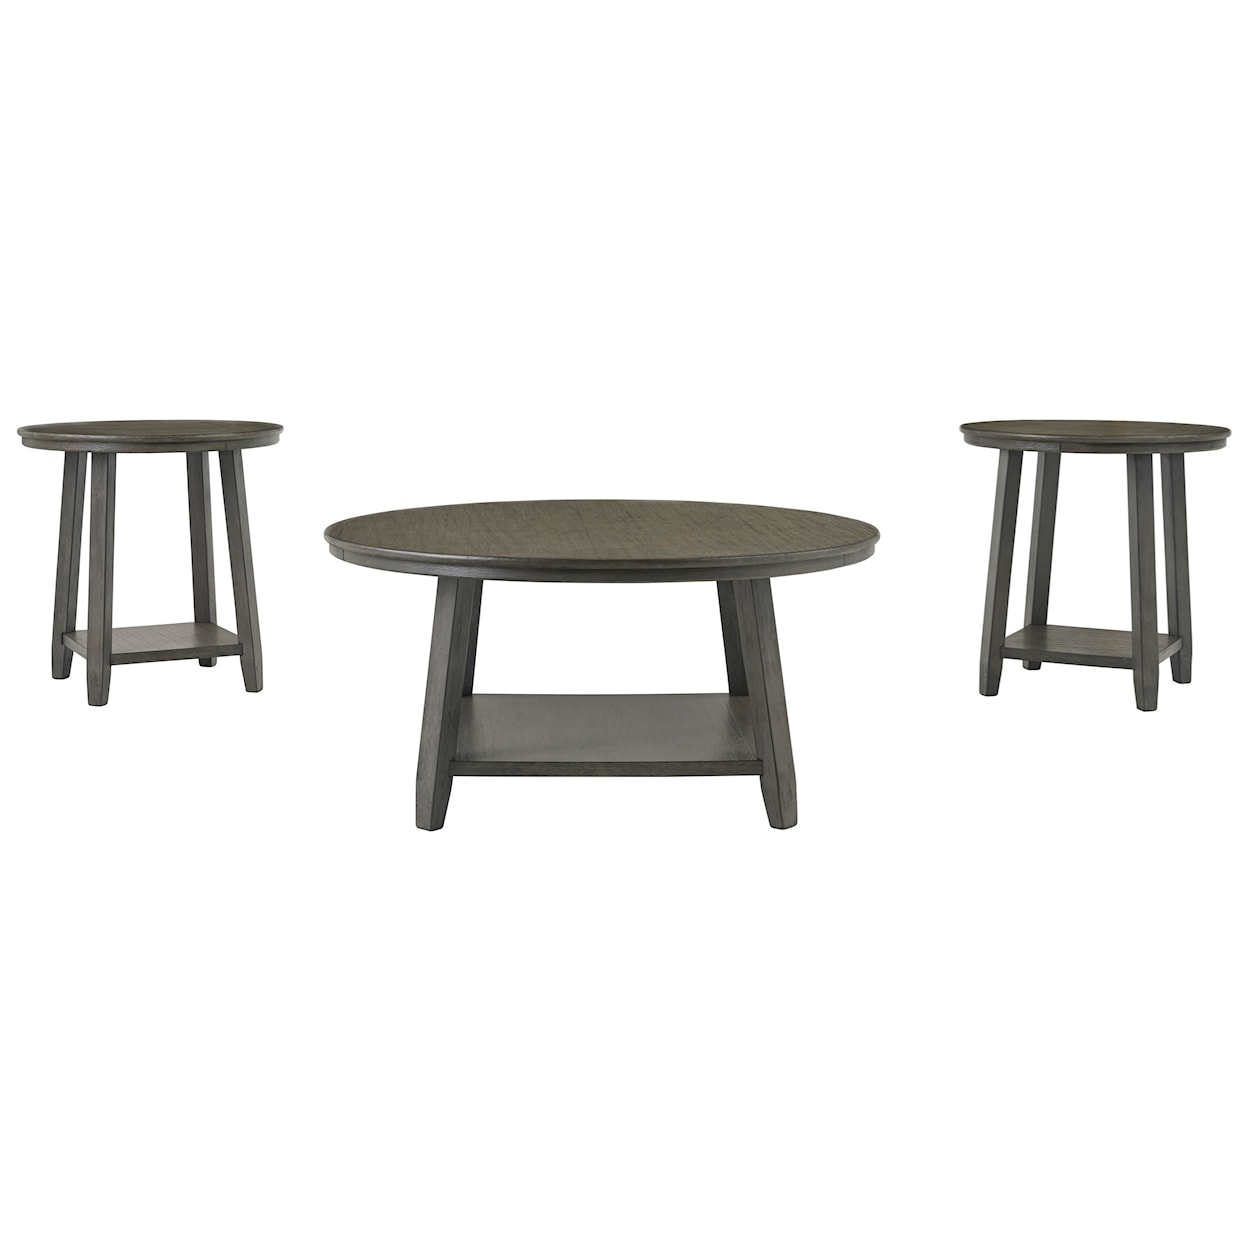 Ashley Furniture Signature Design Caitbrook Occasional Table Set